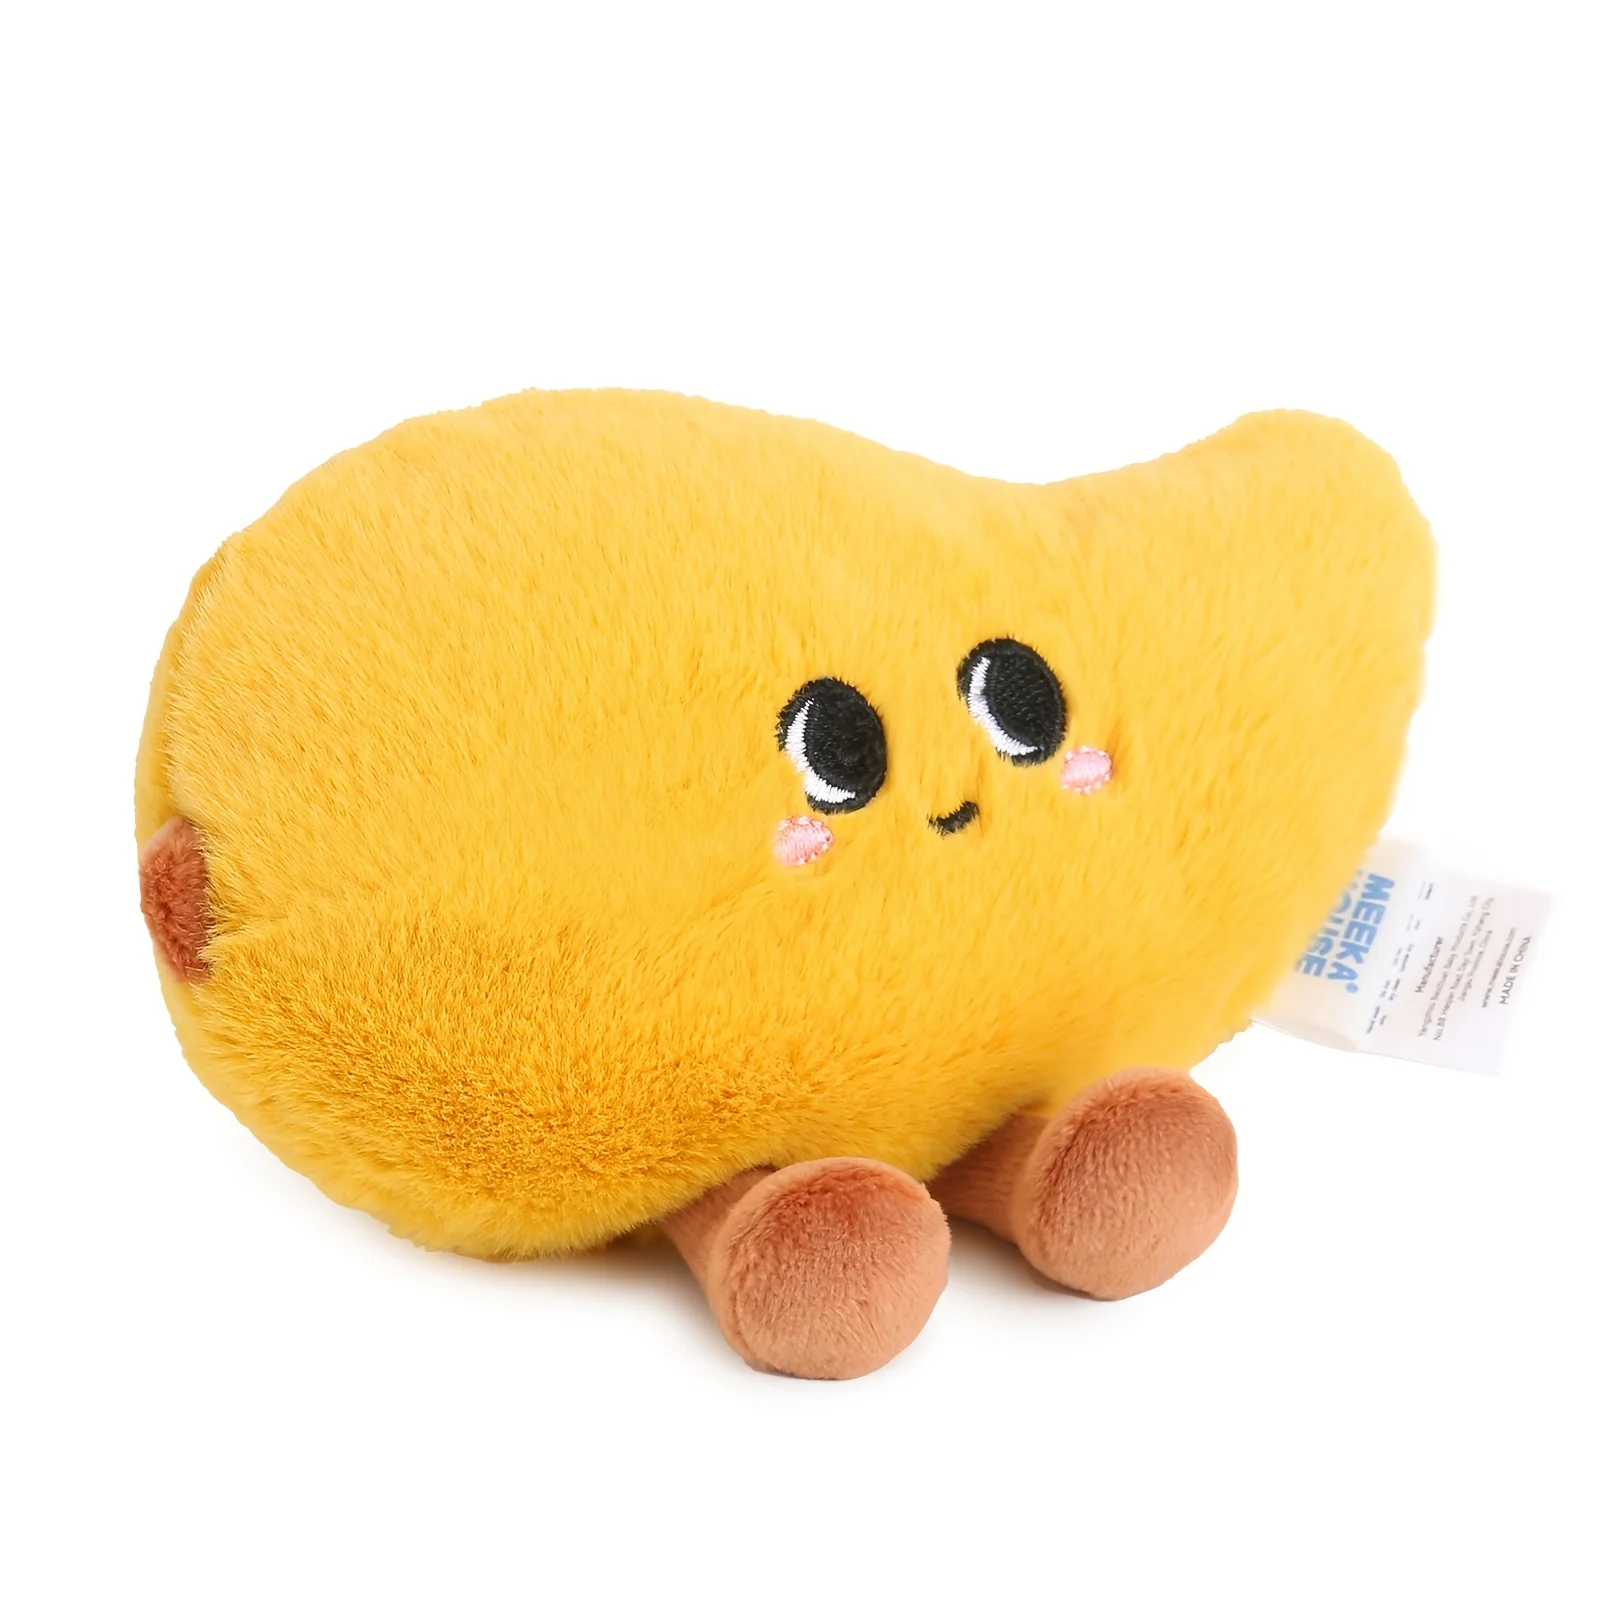 Stuffed Mango Toy | 15cm Plush Doll, Educational Gift for Boys and Girls -1